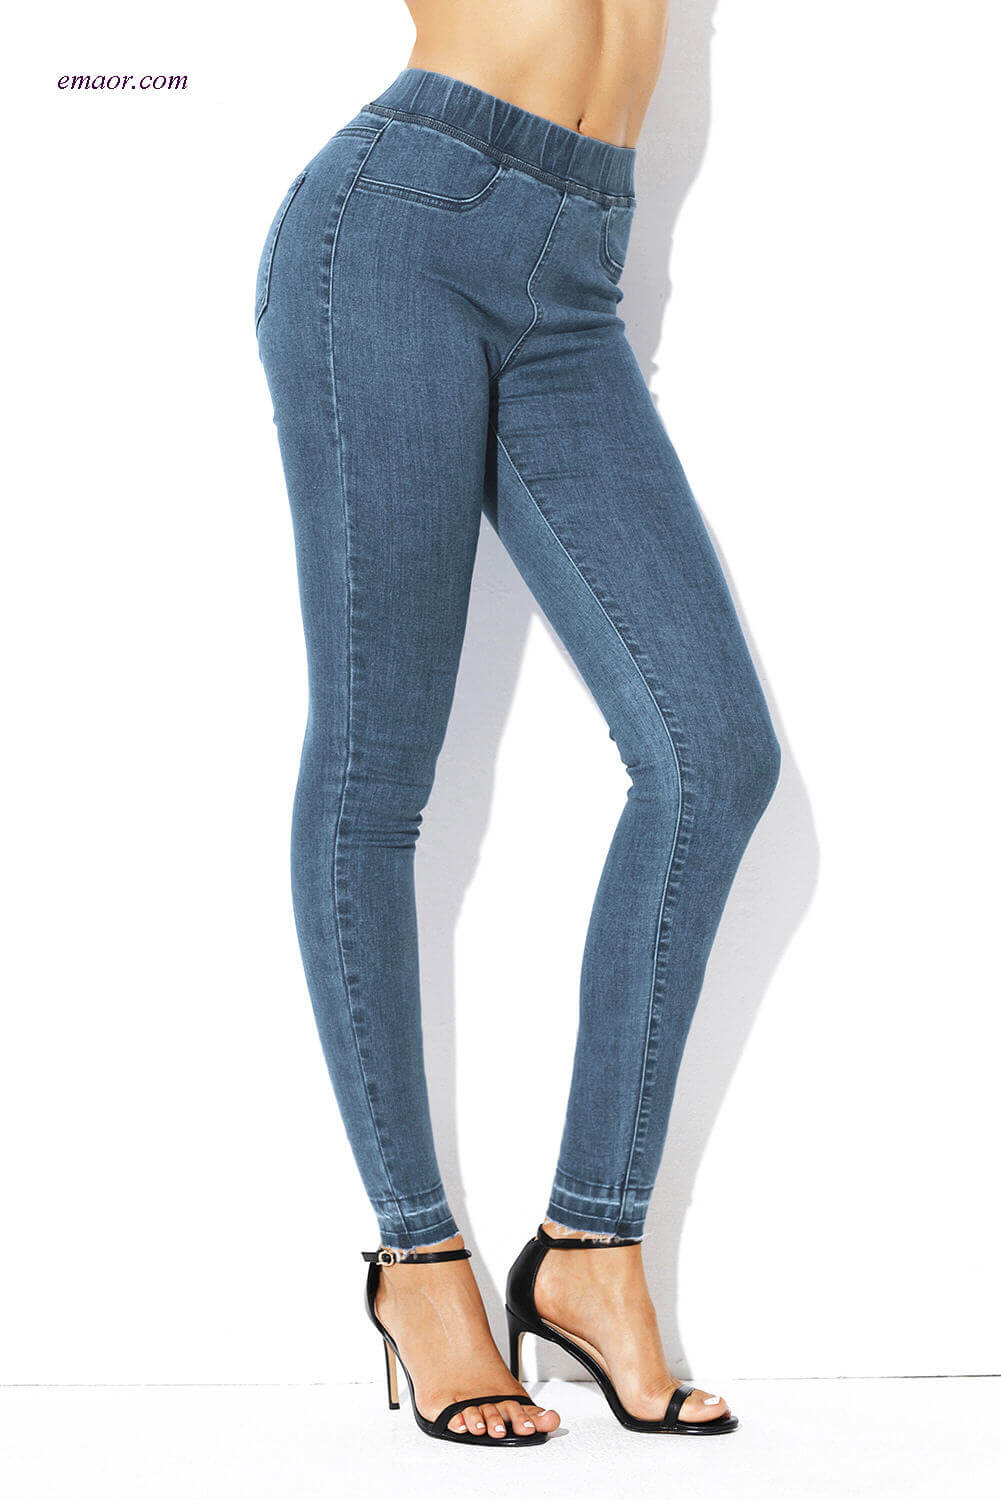 Jeans Wholesale Elastic Waist Jeans Stretch Pants for Women